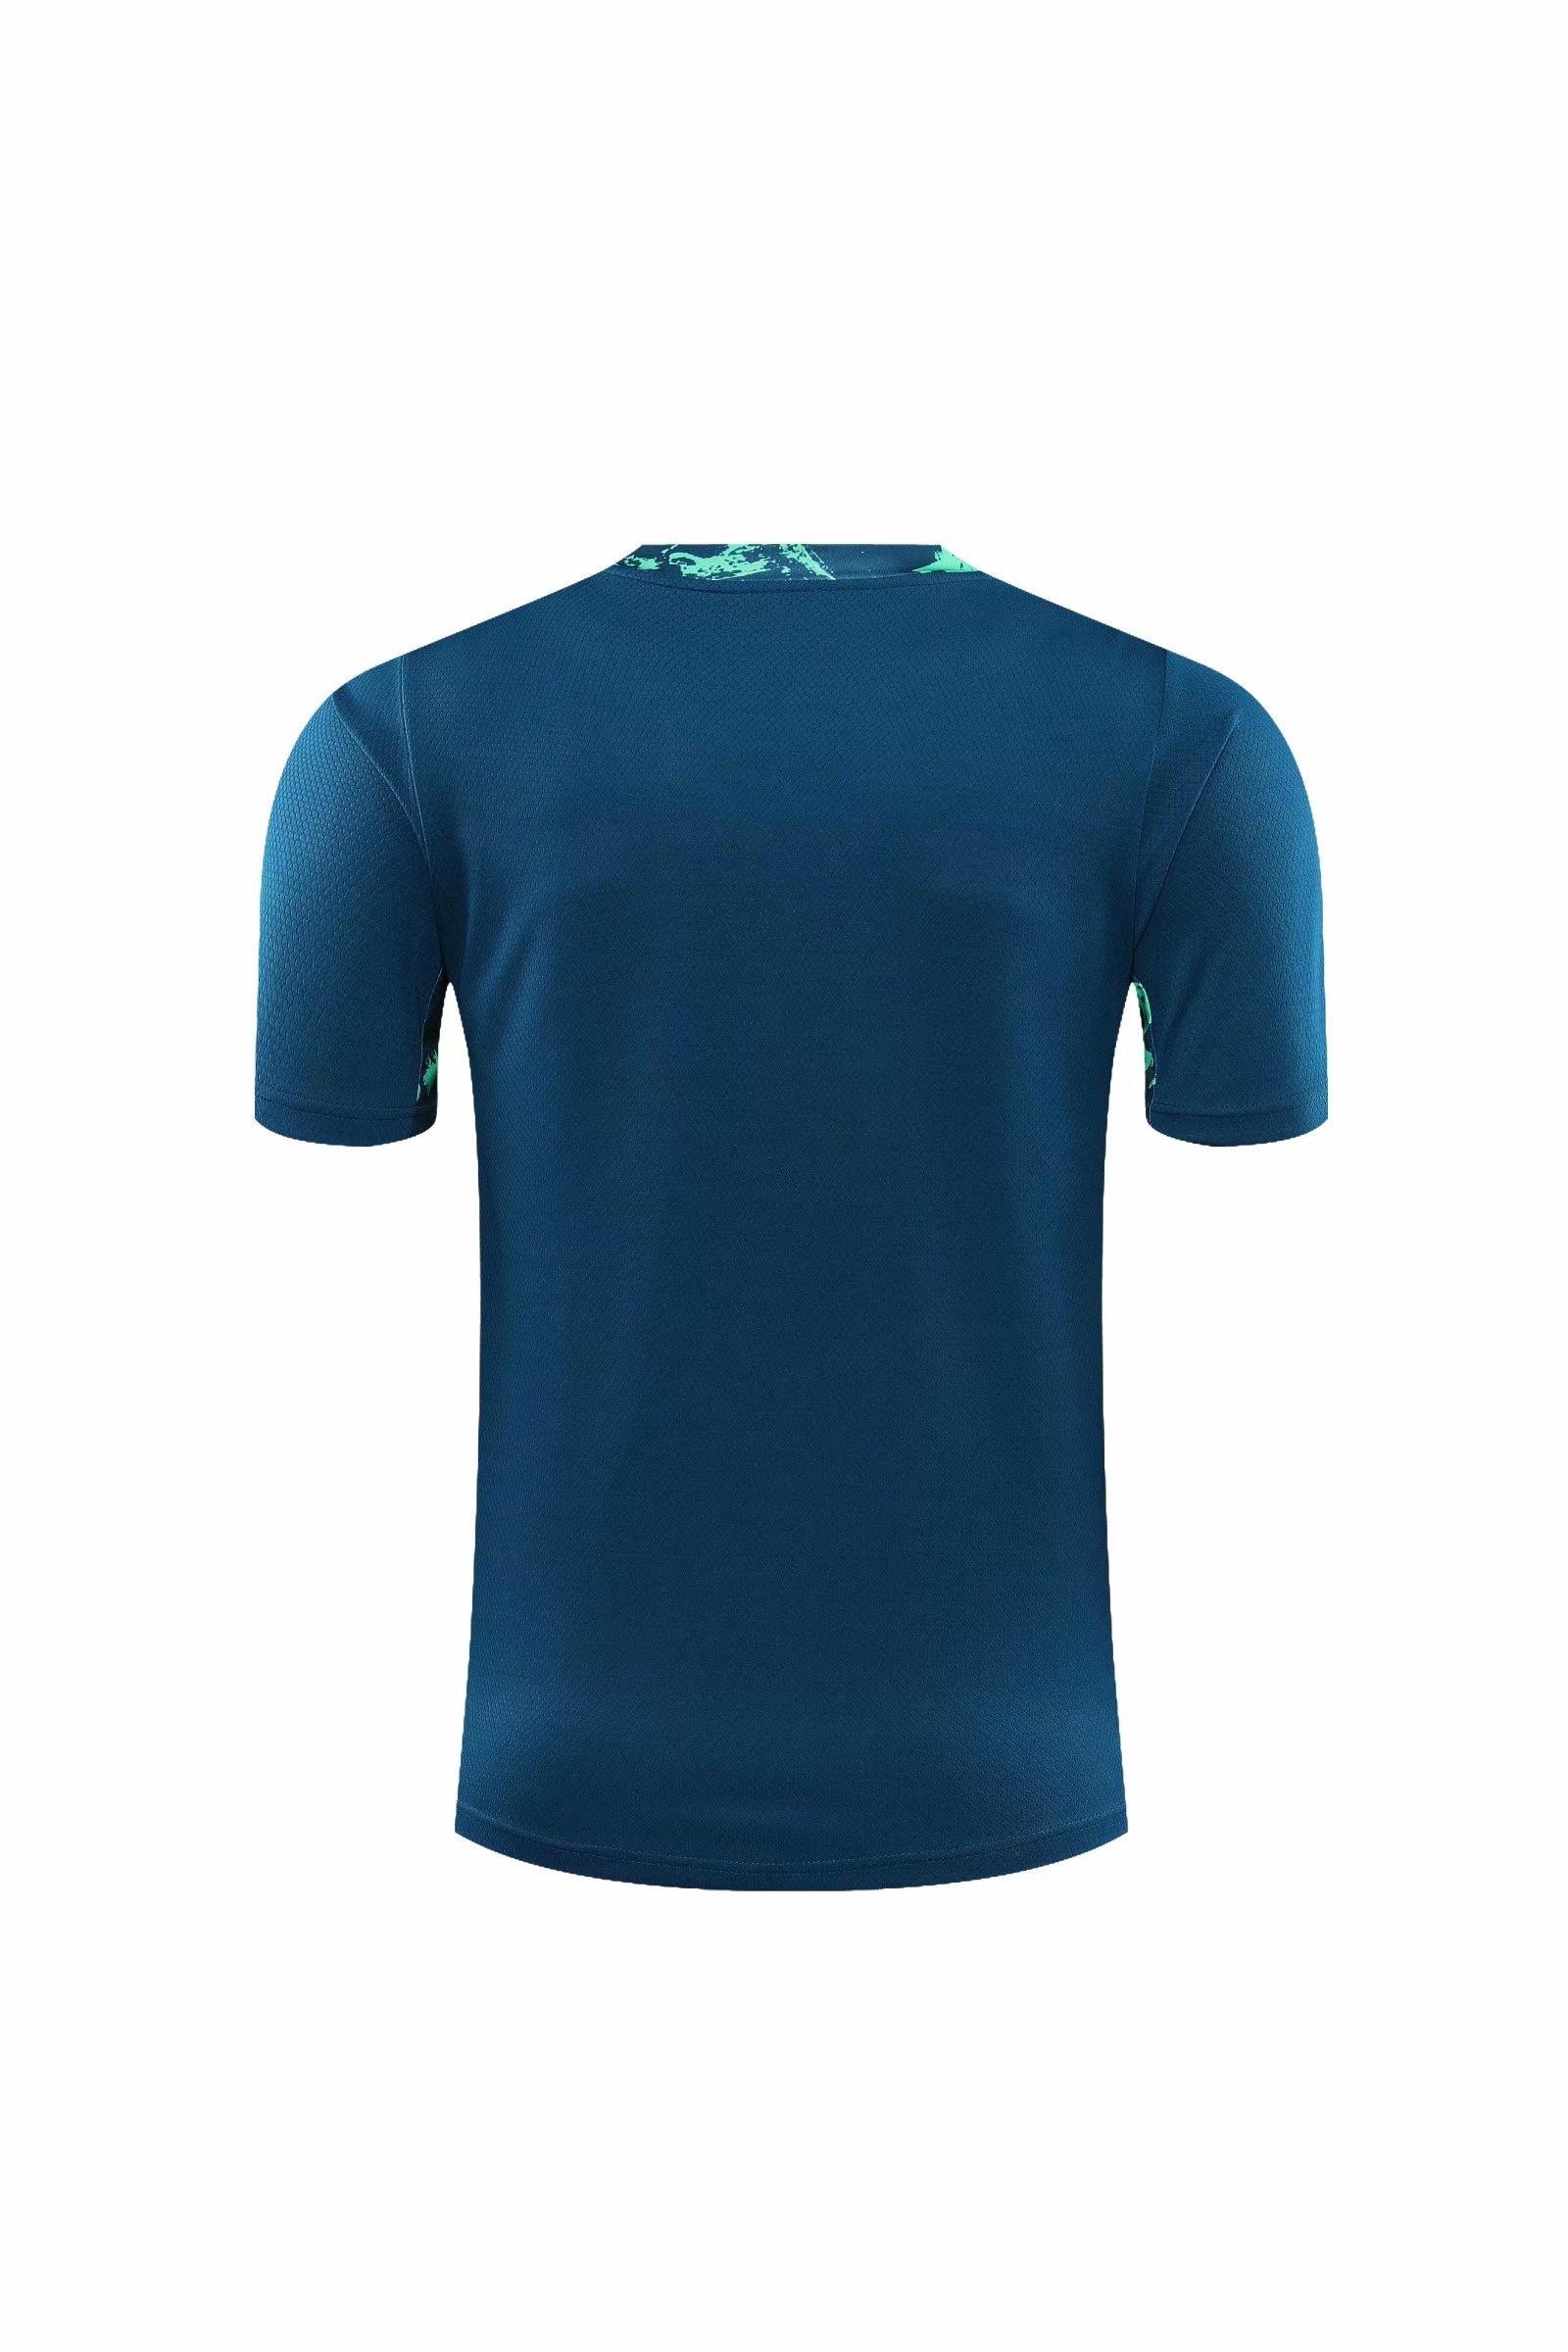 2020-2021 Flamenco football goalkeeper shirt